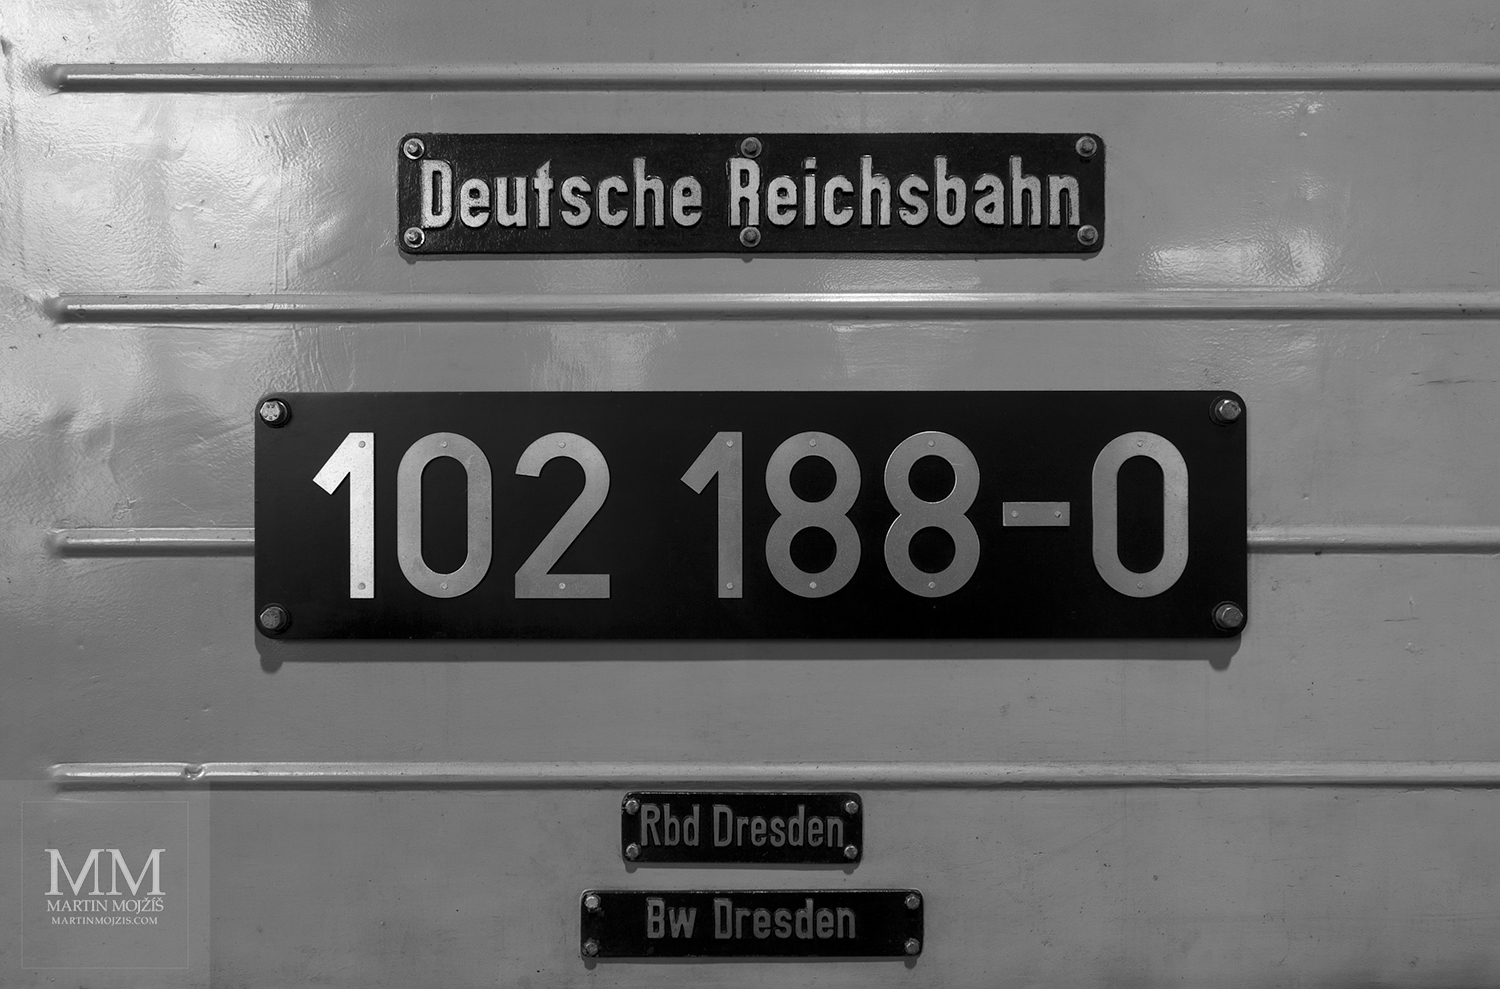 Nápisy Deutsche Reichsbahn, 102 188-0, Rbd Dresden, Bw Dresden na lokomotivě. Eisenbahnmuseum Dresden. Železniční muzeum v Drážďanech.